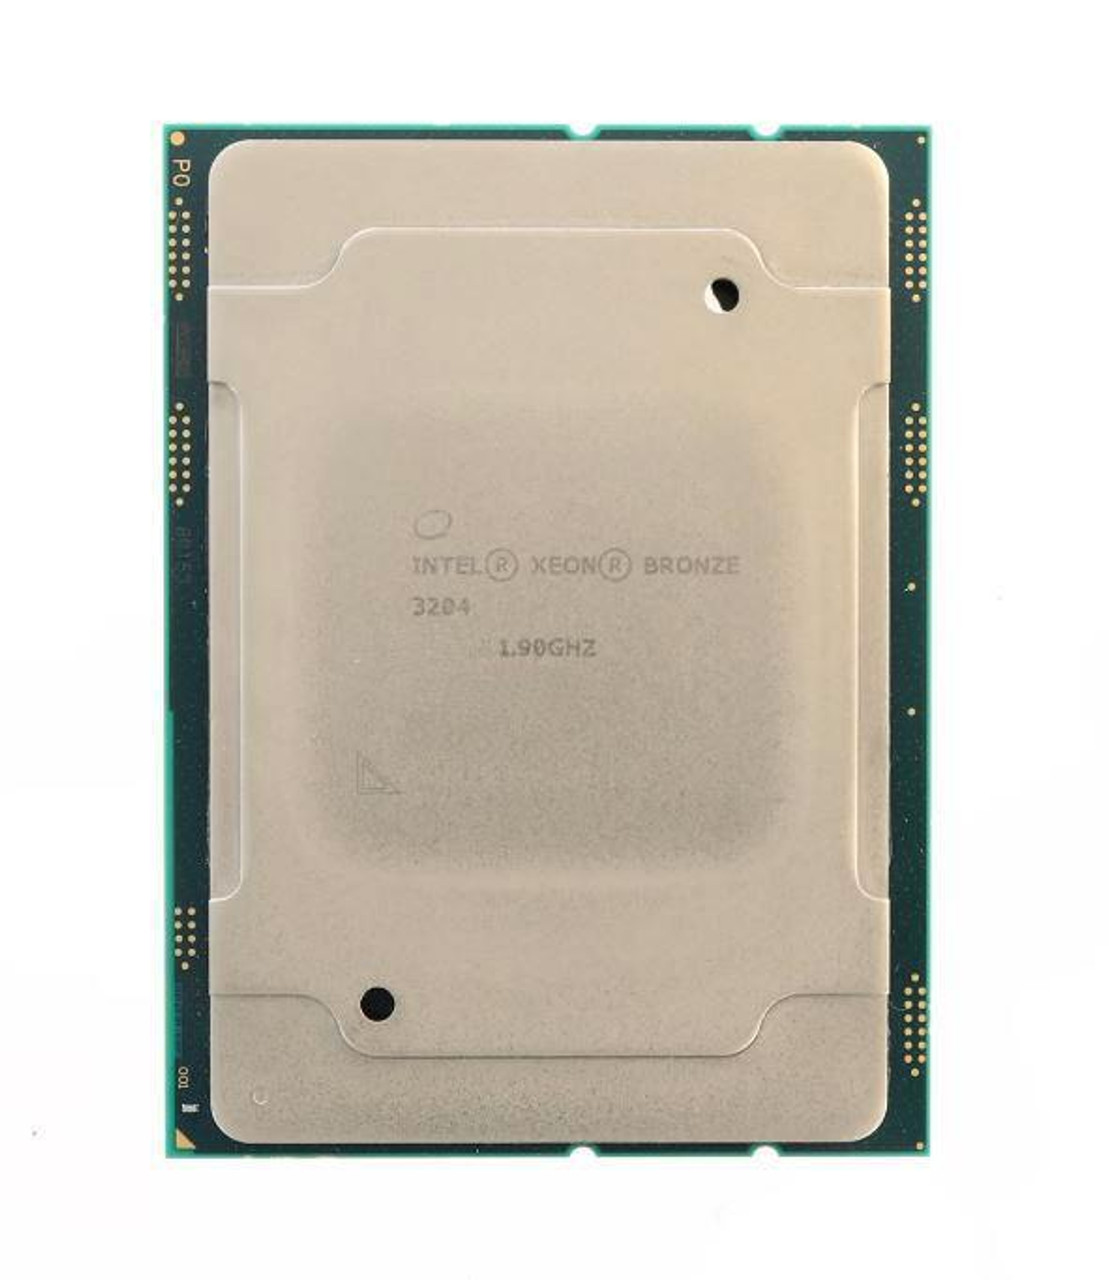 Dell CPU Kit Intel Xeon Bronze 6 Core Processor 3204 1.90GHz 8.25mb Cache Tdp 85w Fclga3647 For Dell Precision 7820 Tower Workstation ( T7820 ) (